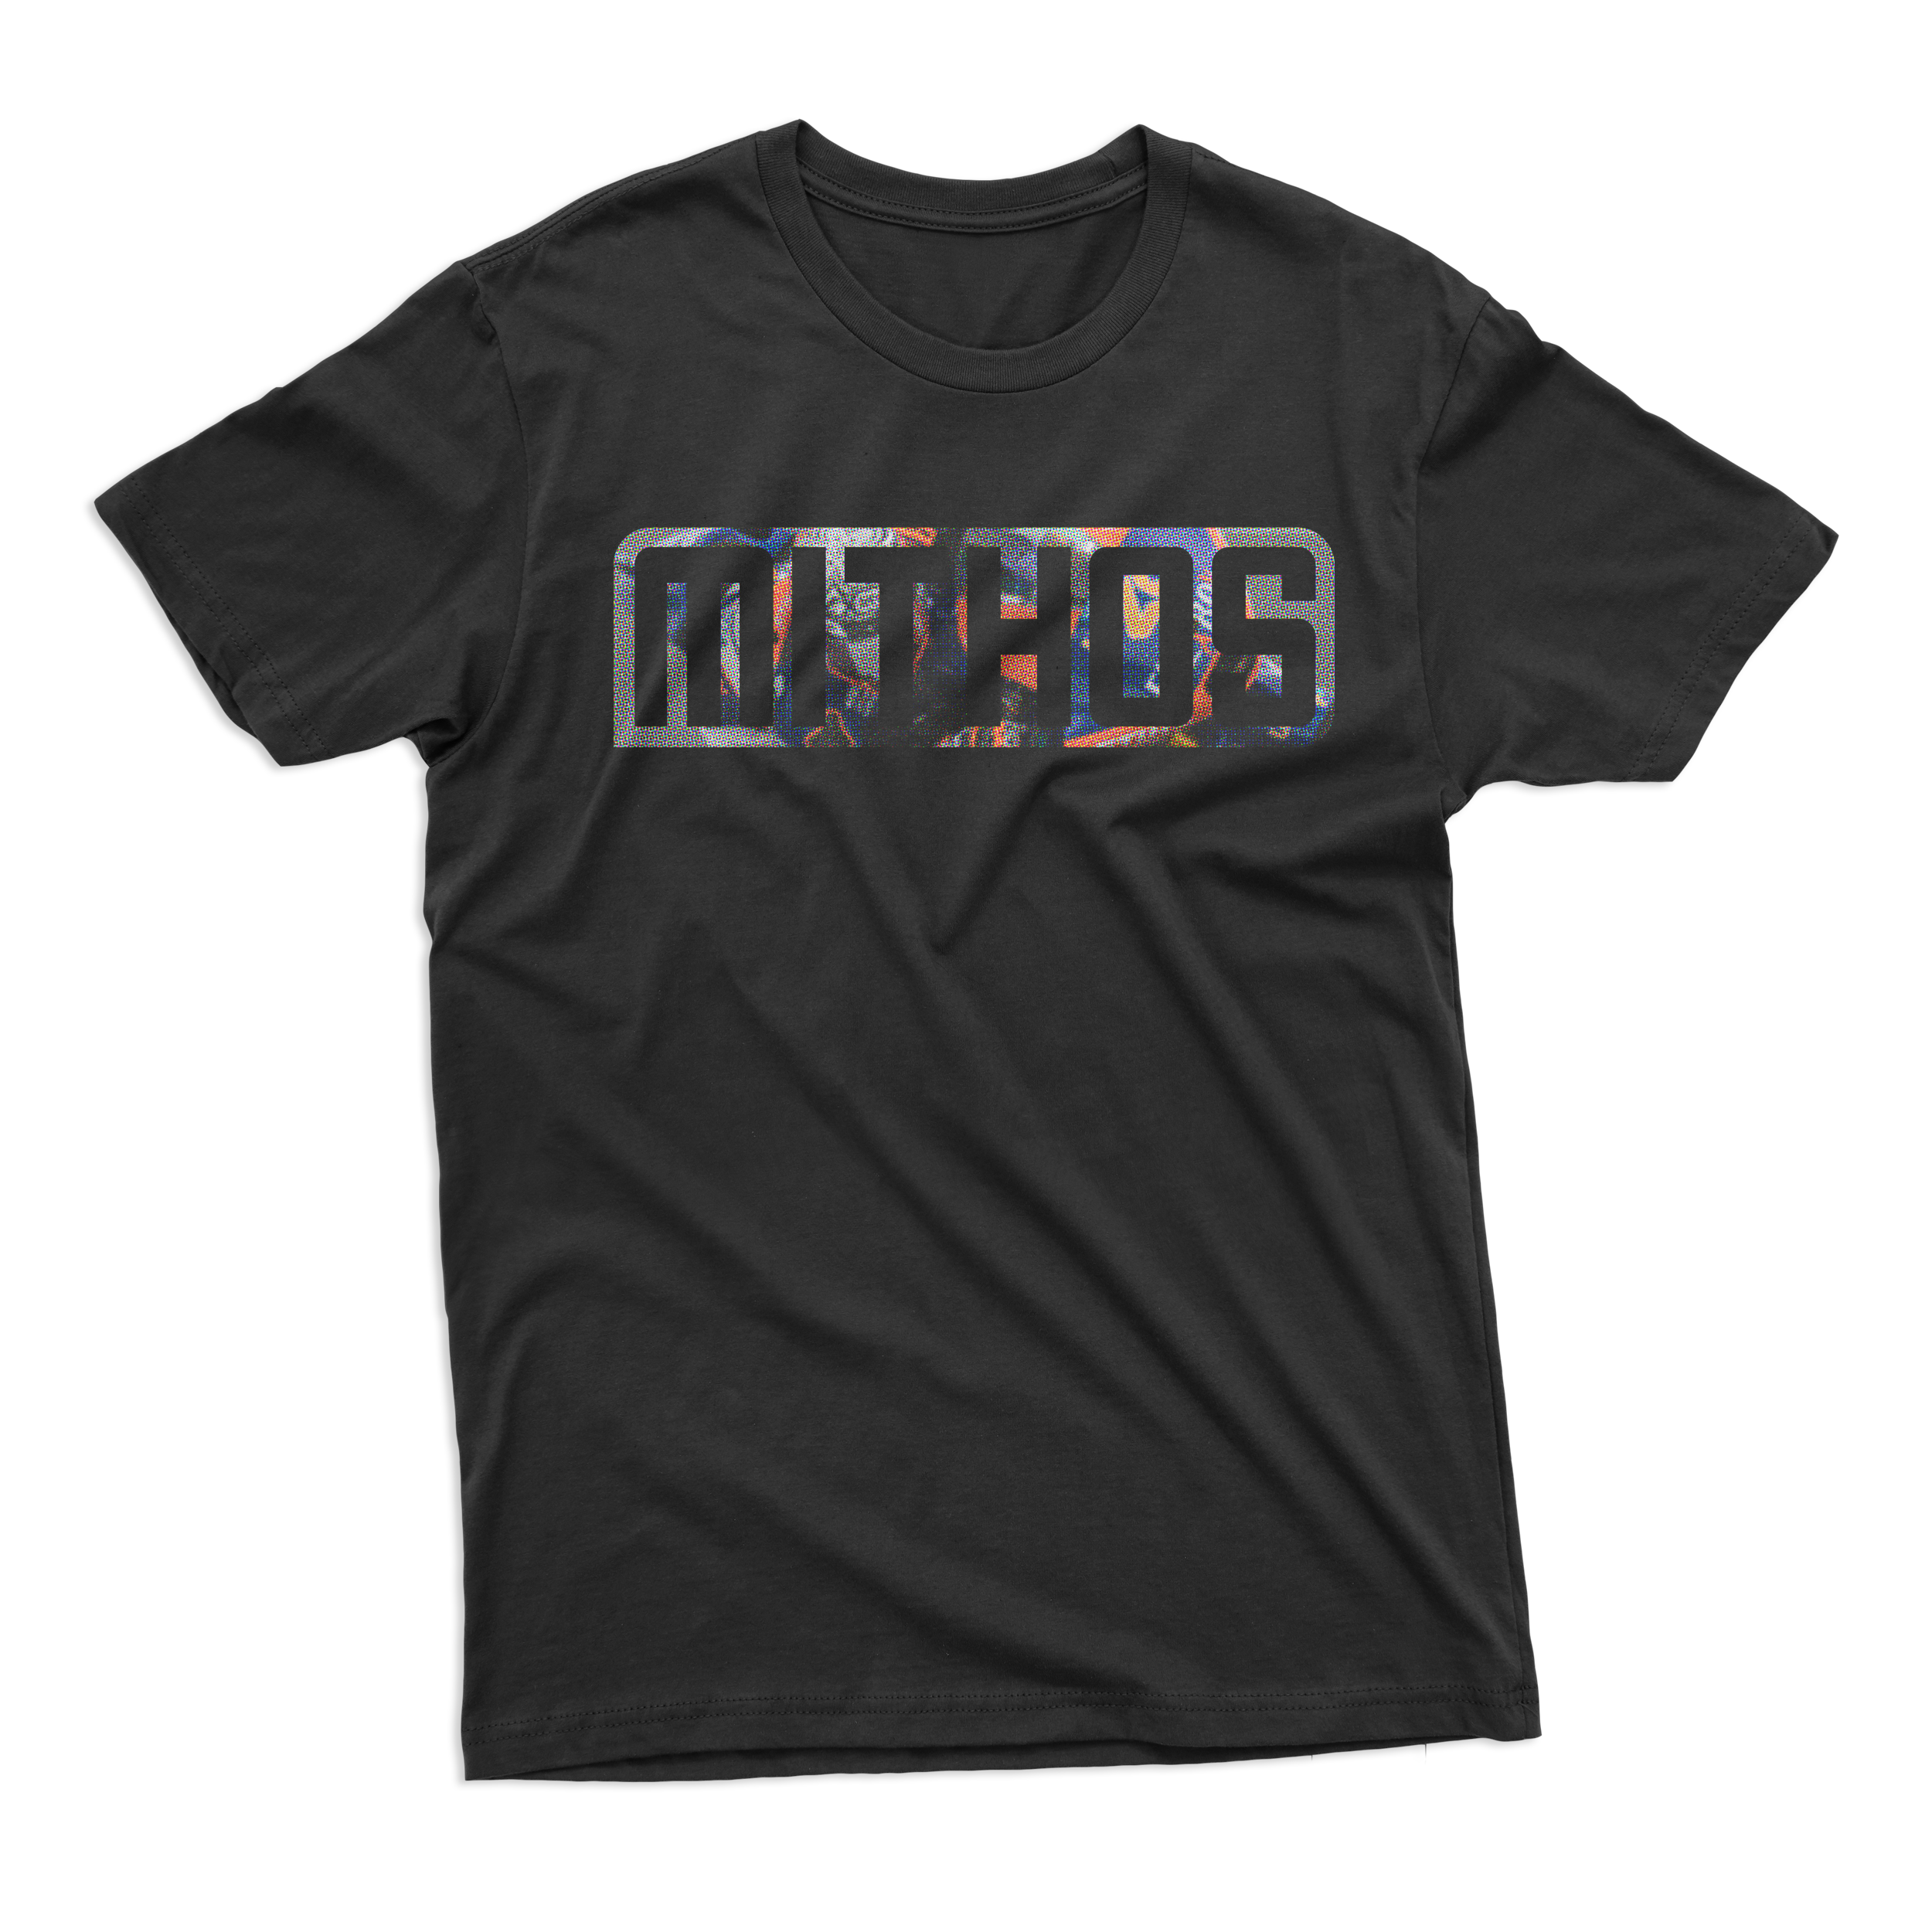 Mithos T-Shirt CAPTURED